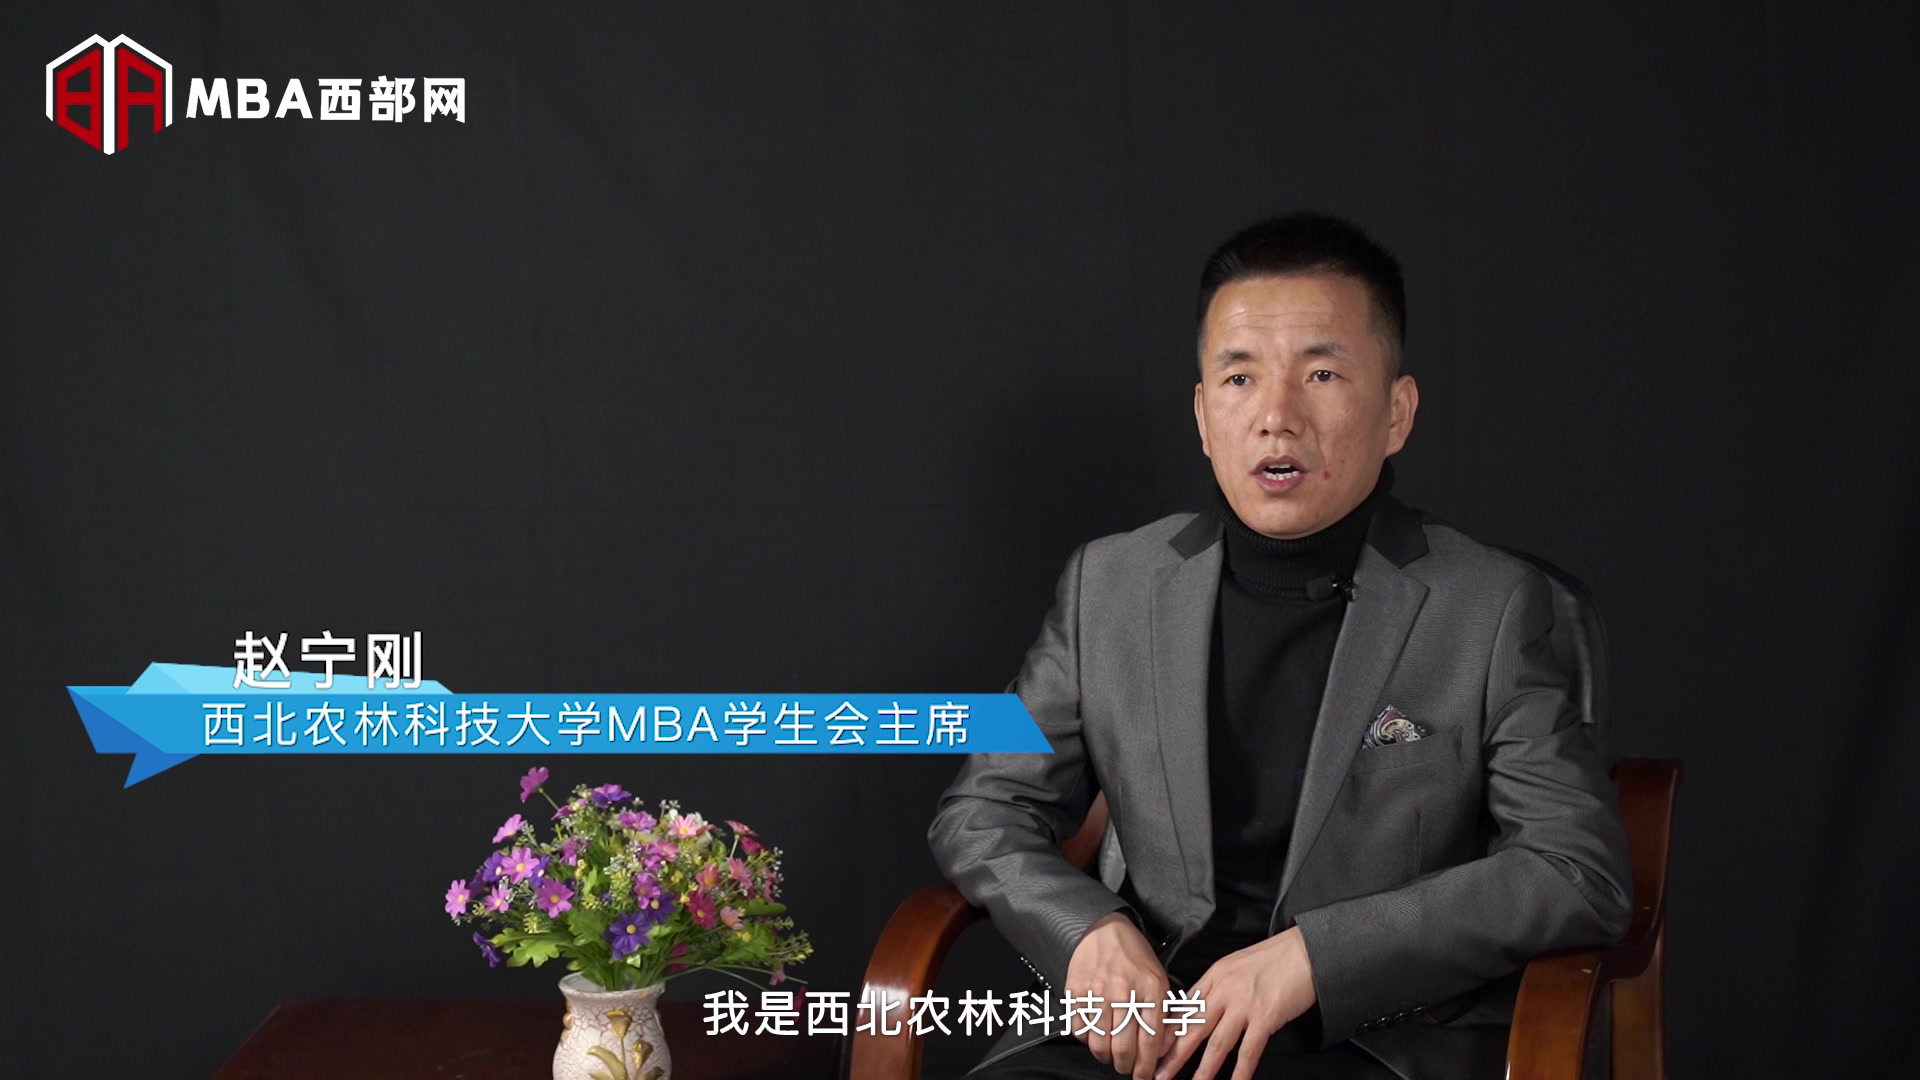 MBA西部网专访西北农林科技大学MBA学生会主席赵宁刚